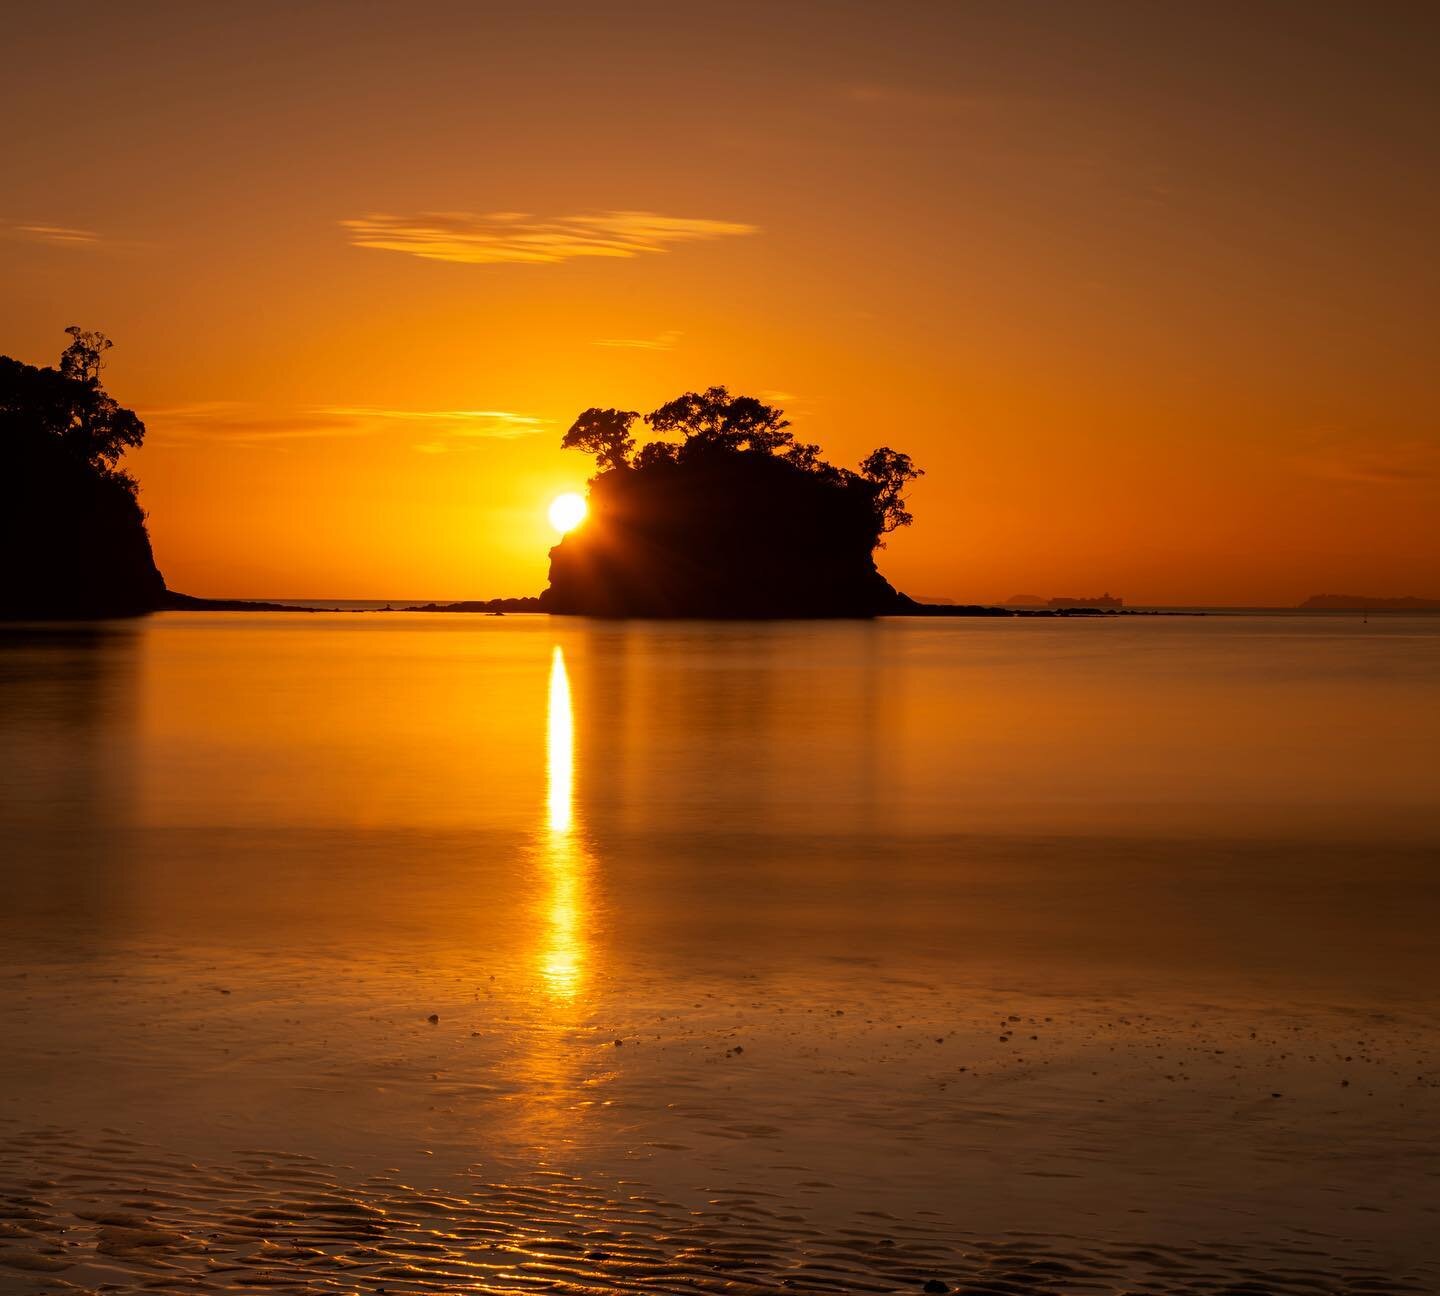 A New Zealand sunrise. #yourshotphotographer #createexplore #marvelshots #beautifuldestinations #awesomeearth #discoverearth #natgeotravel #globalcapture #ig_color @bbcearth #natgeoyourshot #landscapelovers #earthofficial #nisiopticsusa #hipaae #pass